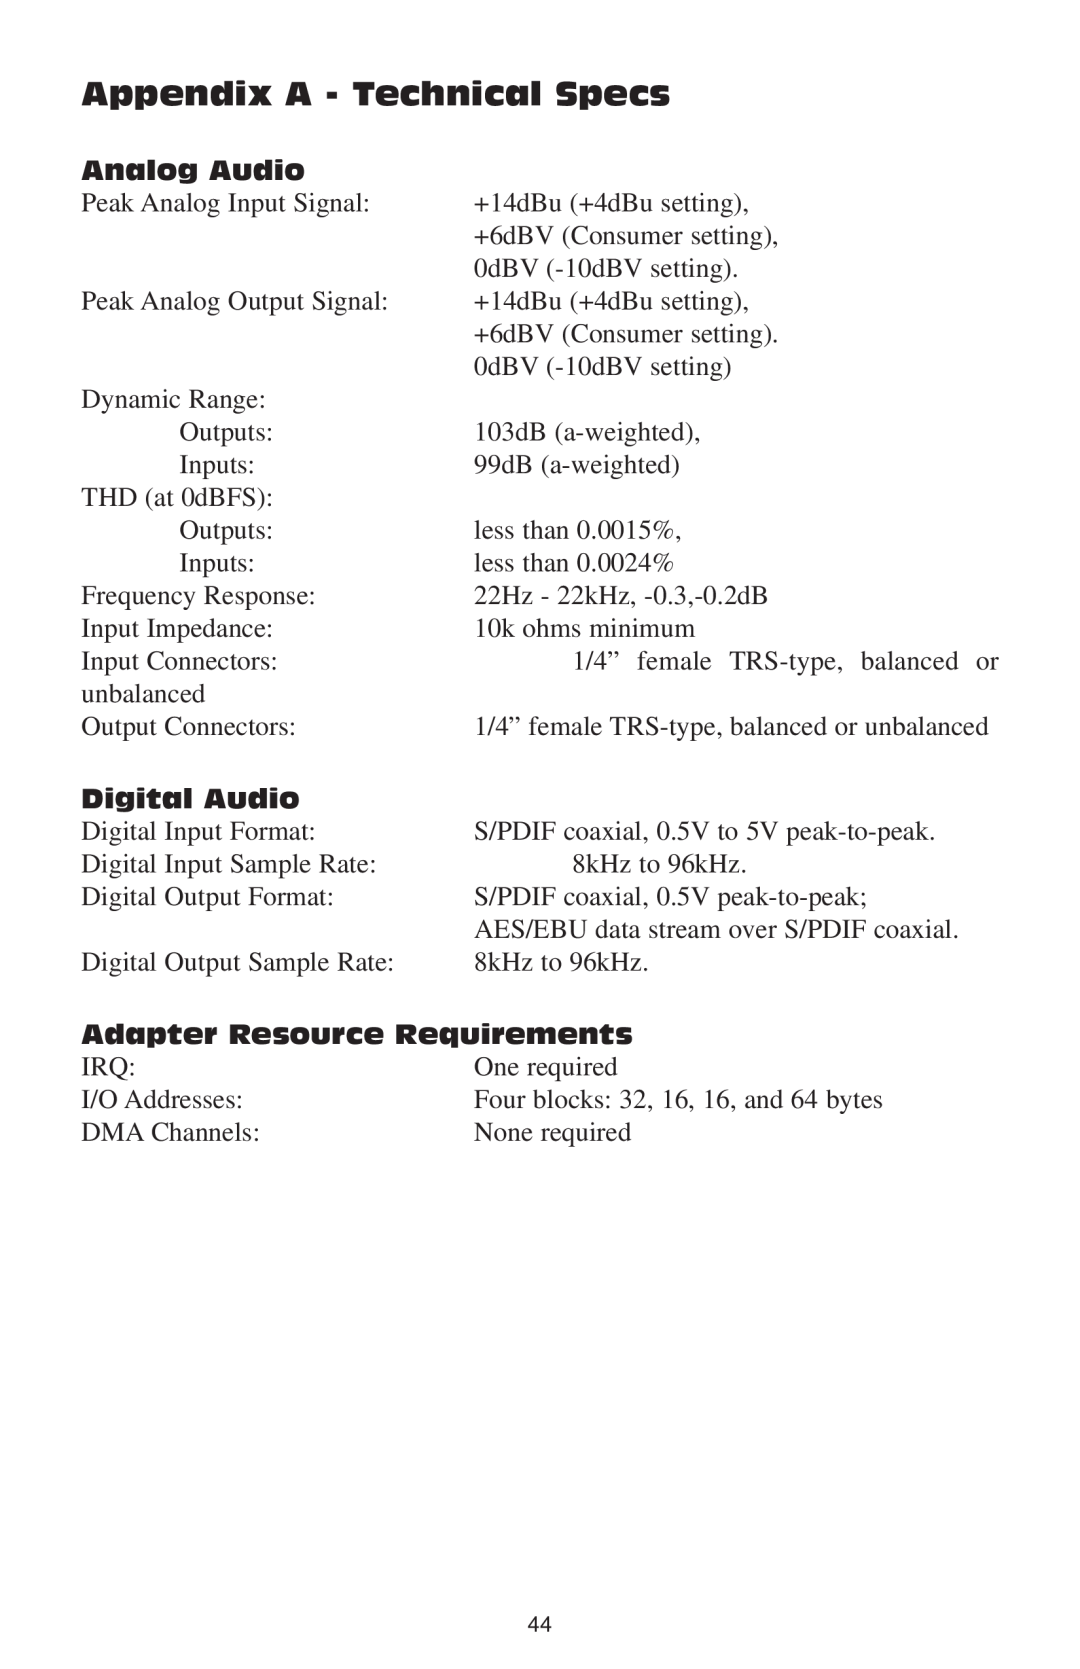 M-Audio 66 manual Appendix A - Technical Specs, Analog Audio, Digital Audio, Adapter Resource Requirements 